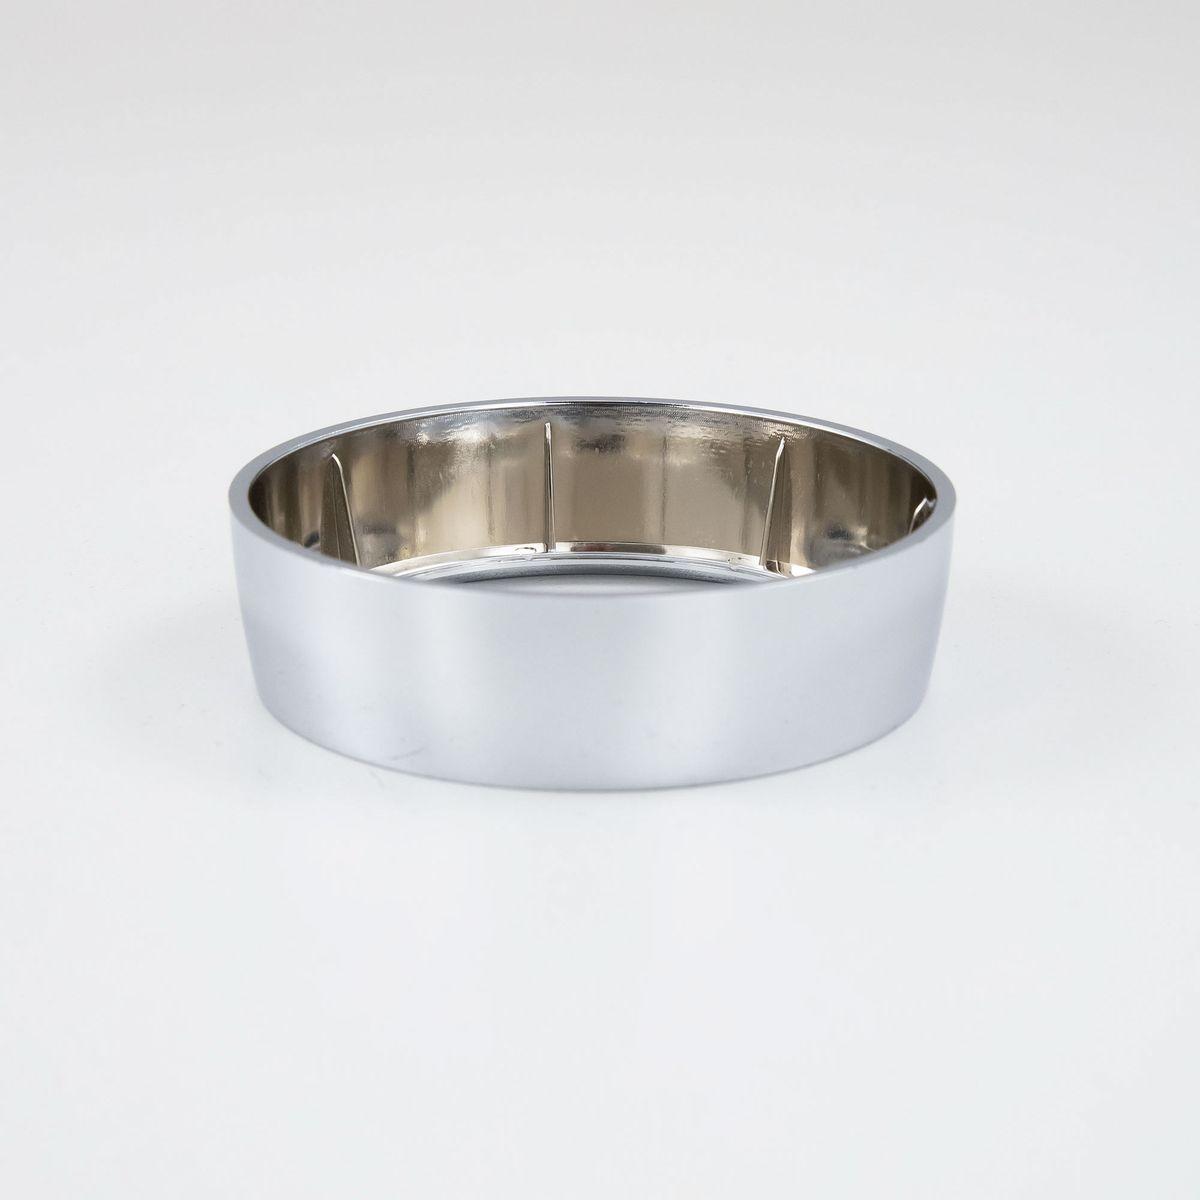 Декоративное кольцо Citilux Гамма CLD004.5